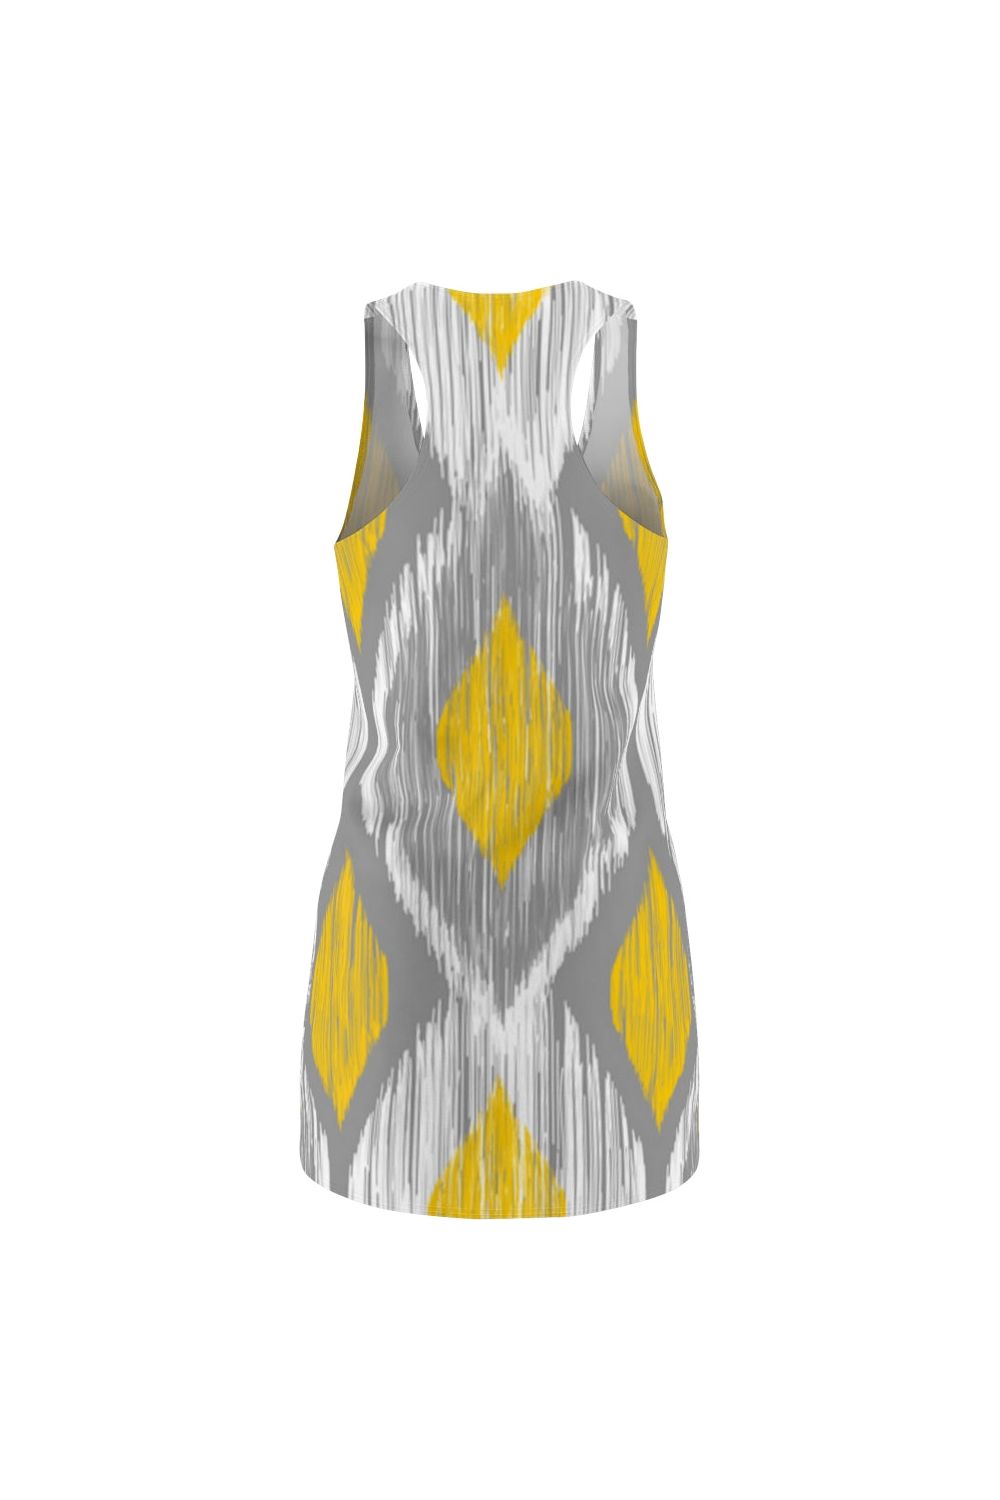 Women's Gray and Yellow Racerback Dress